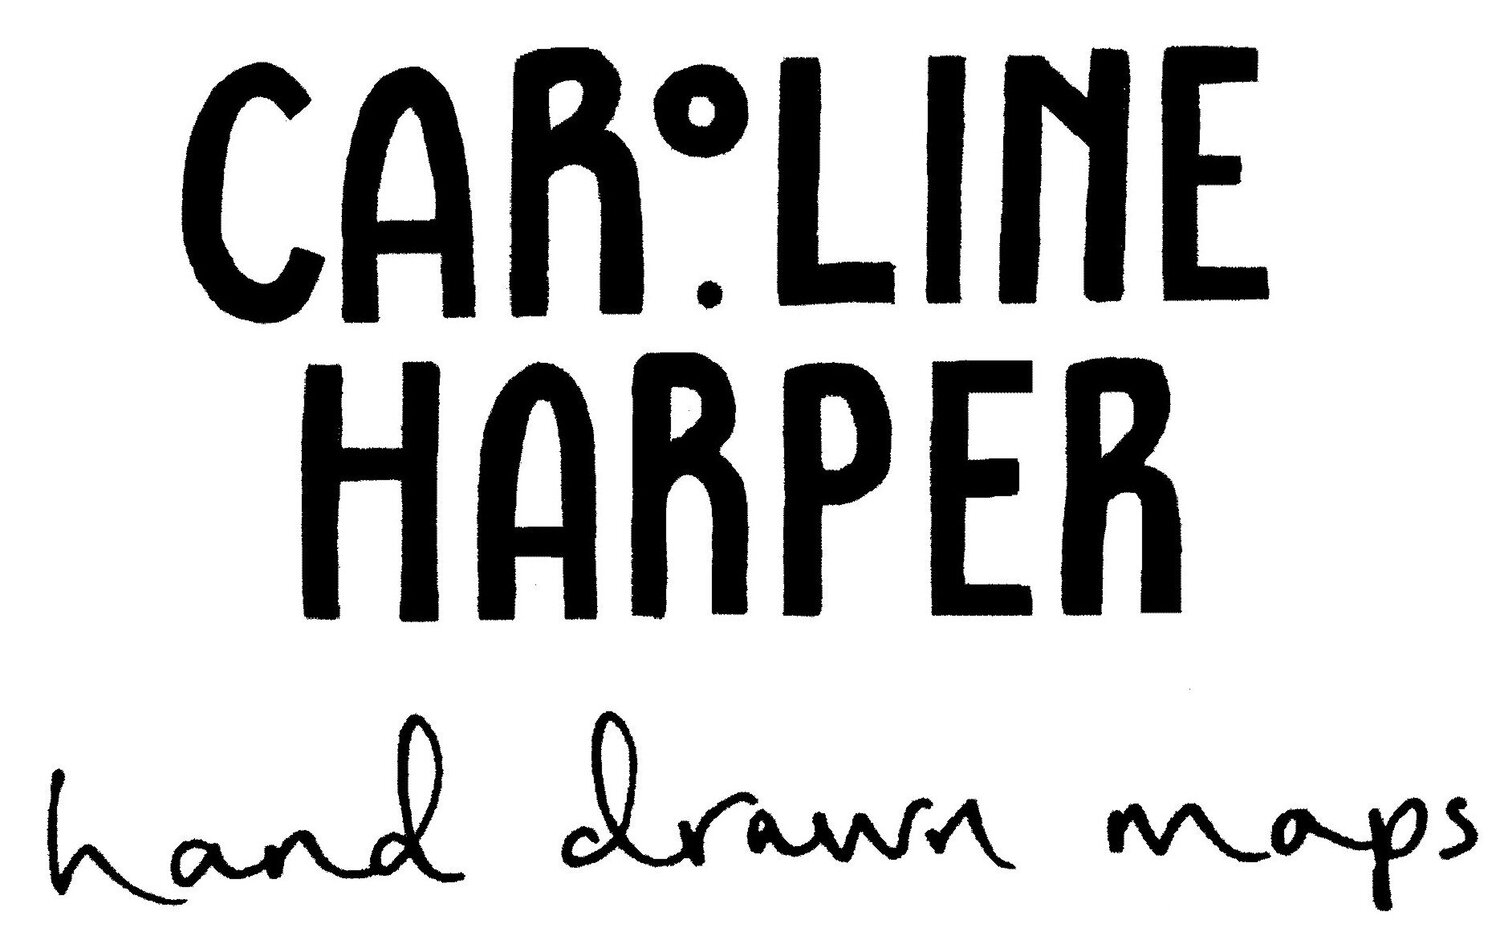 Caroline Harper. Hand-drawn maps